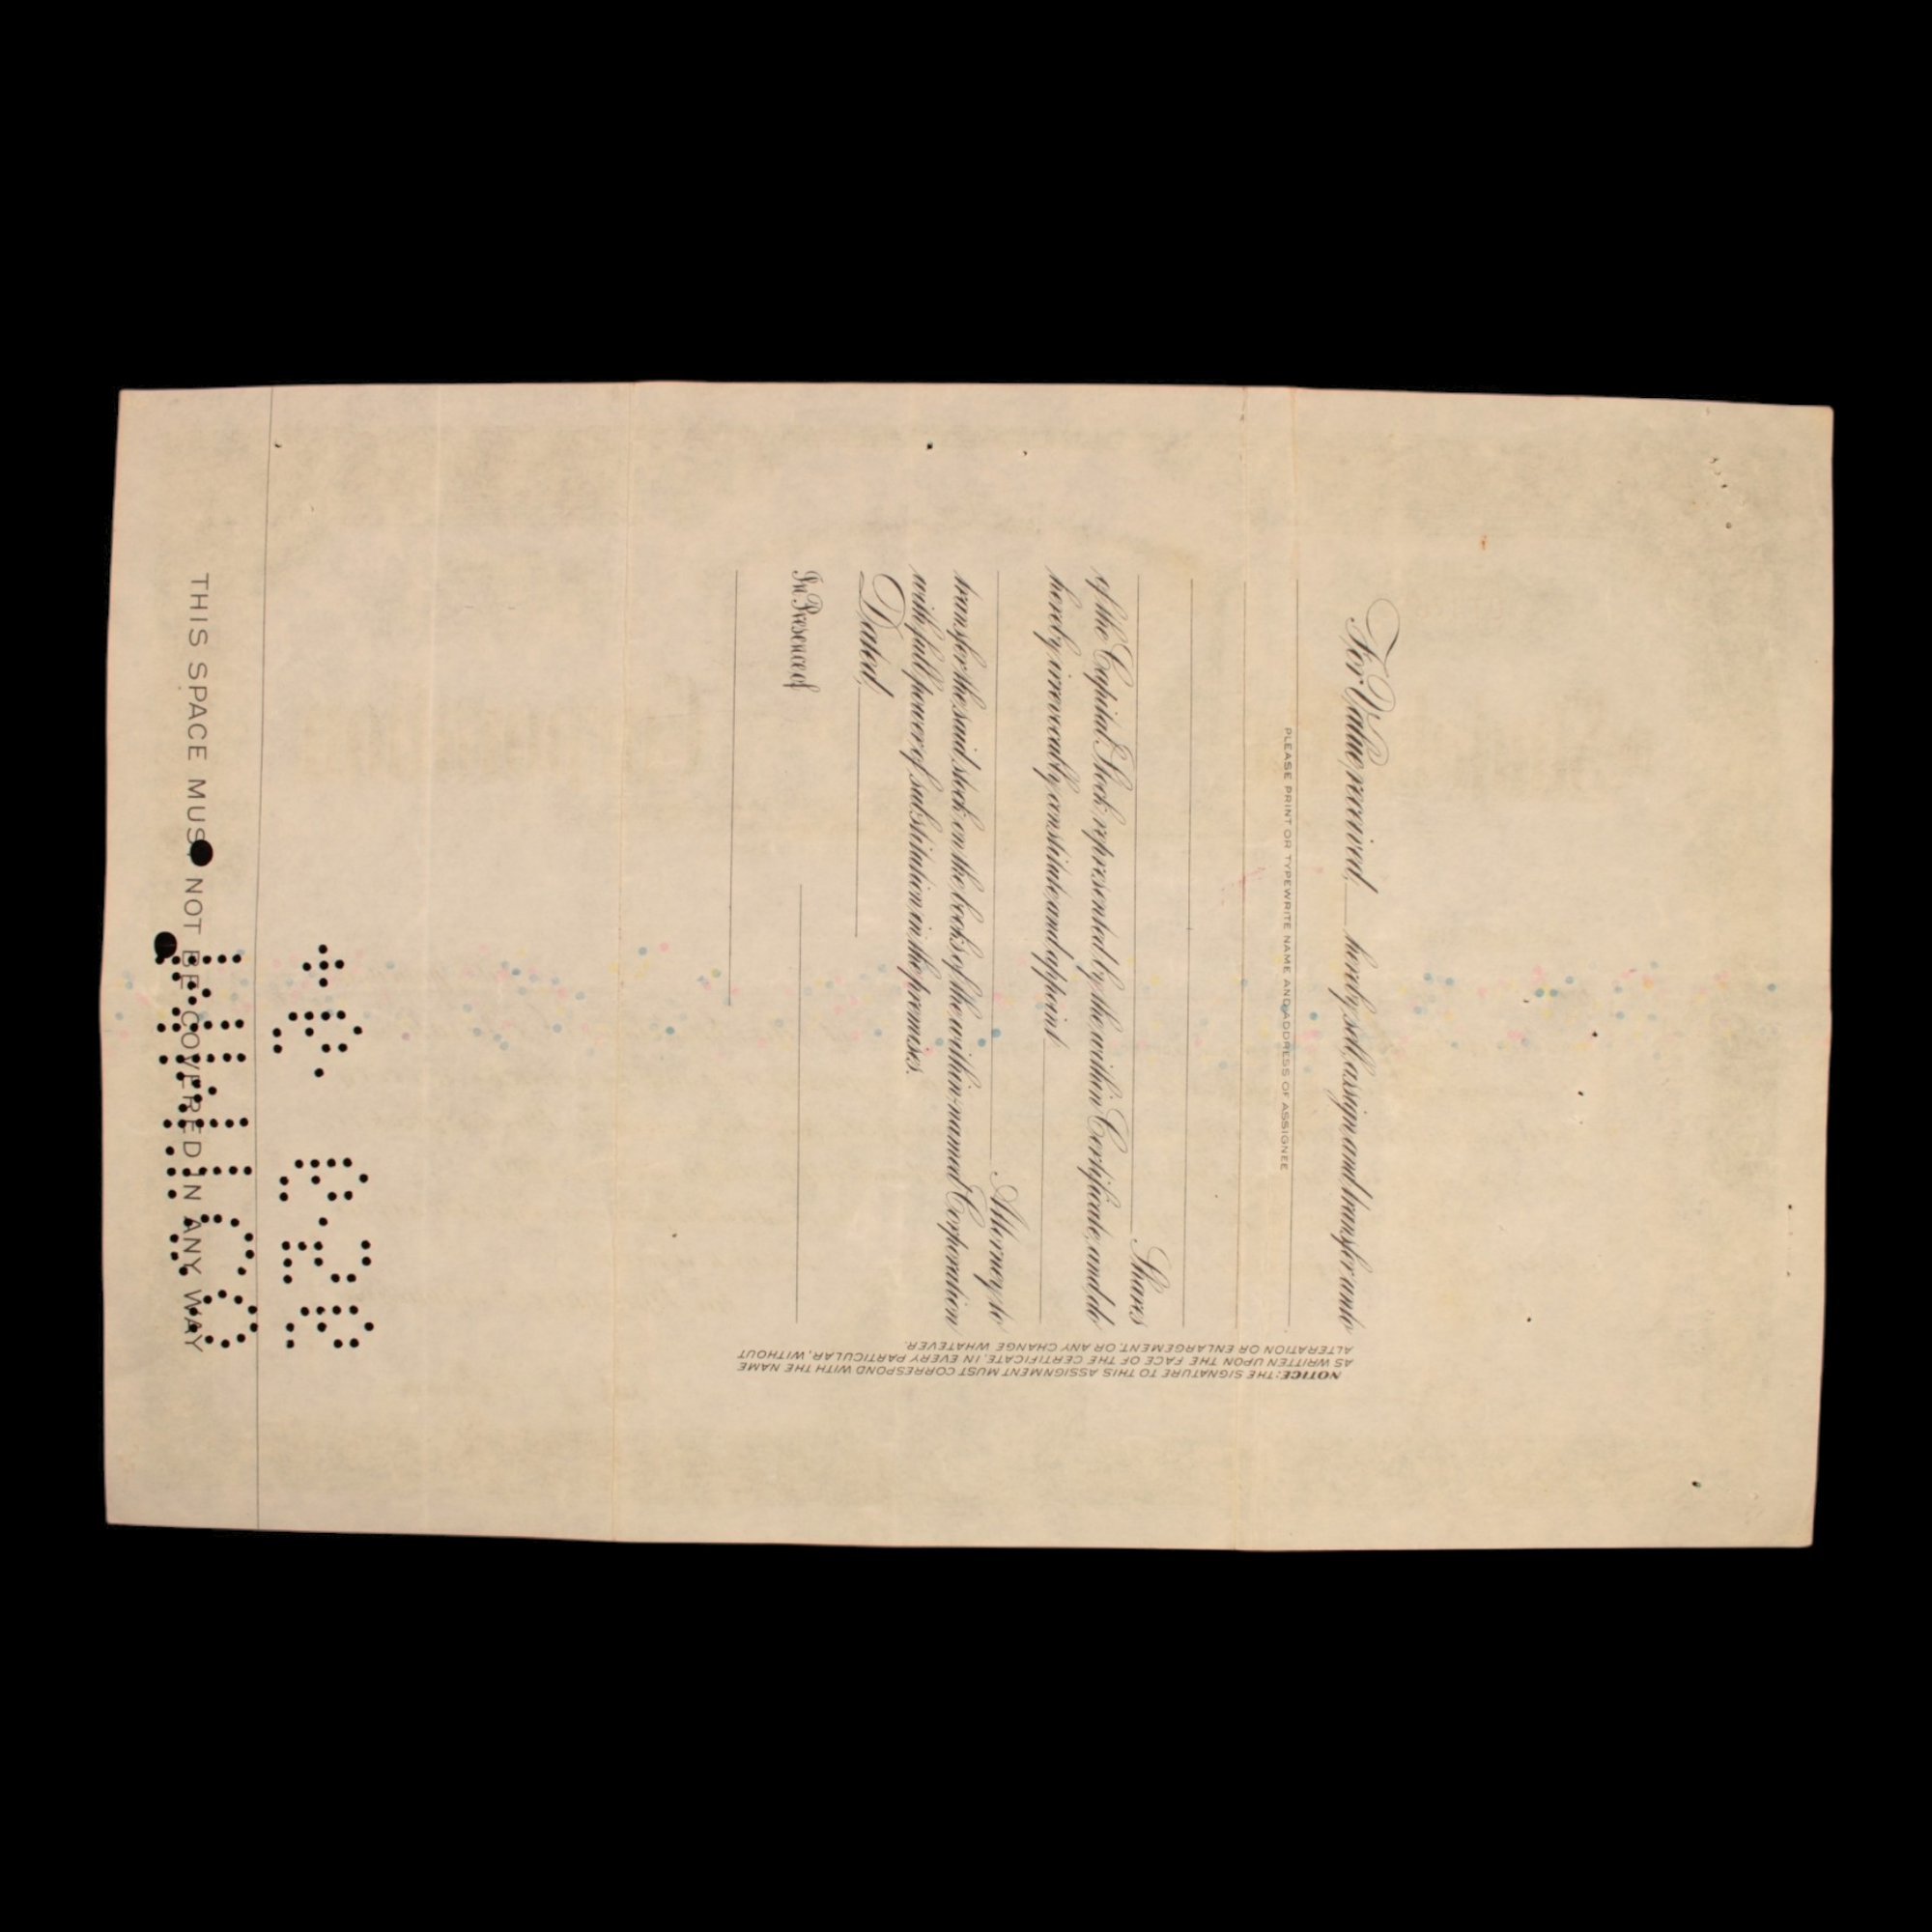 File:Allied Paper Corporation Stock Certificate 1966.jpg - Wikipedia